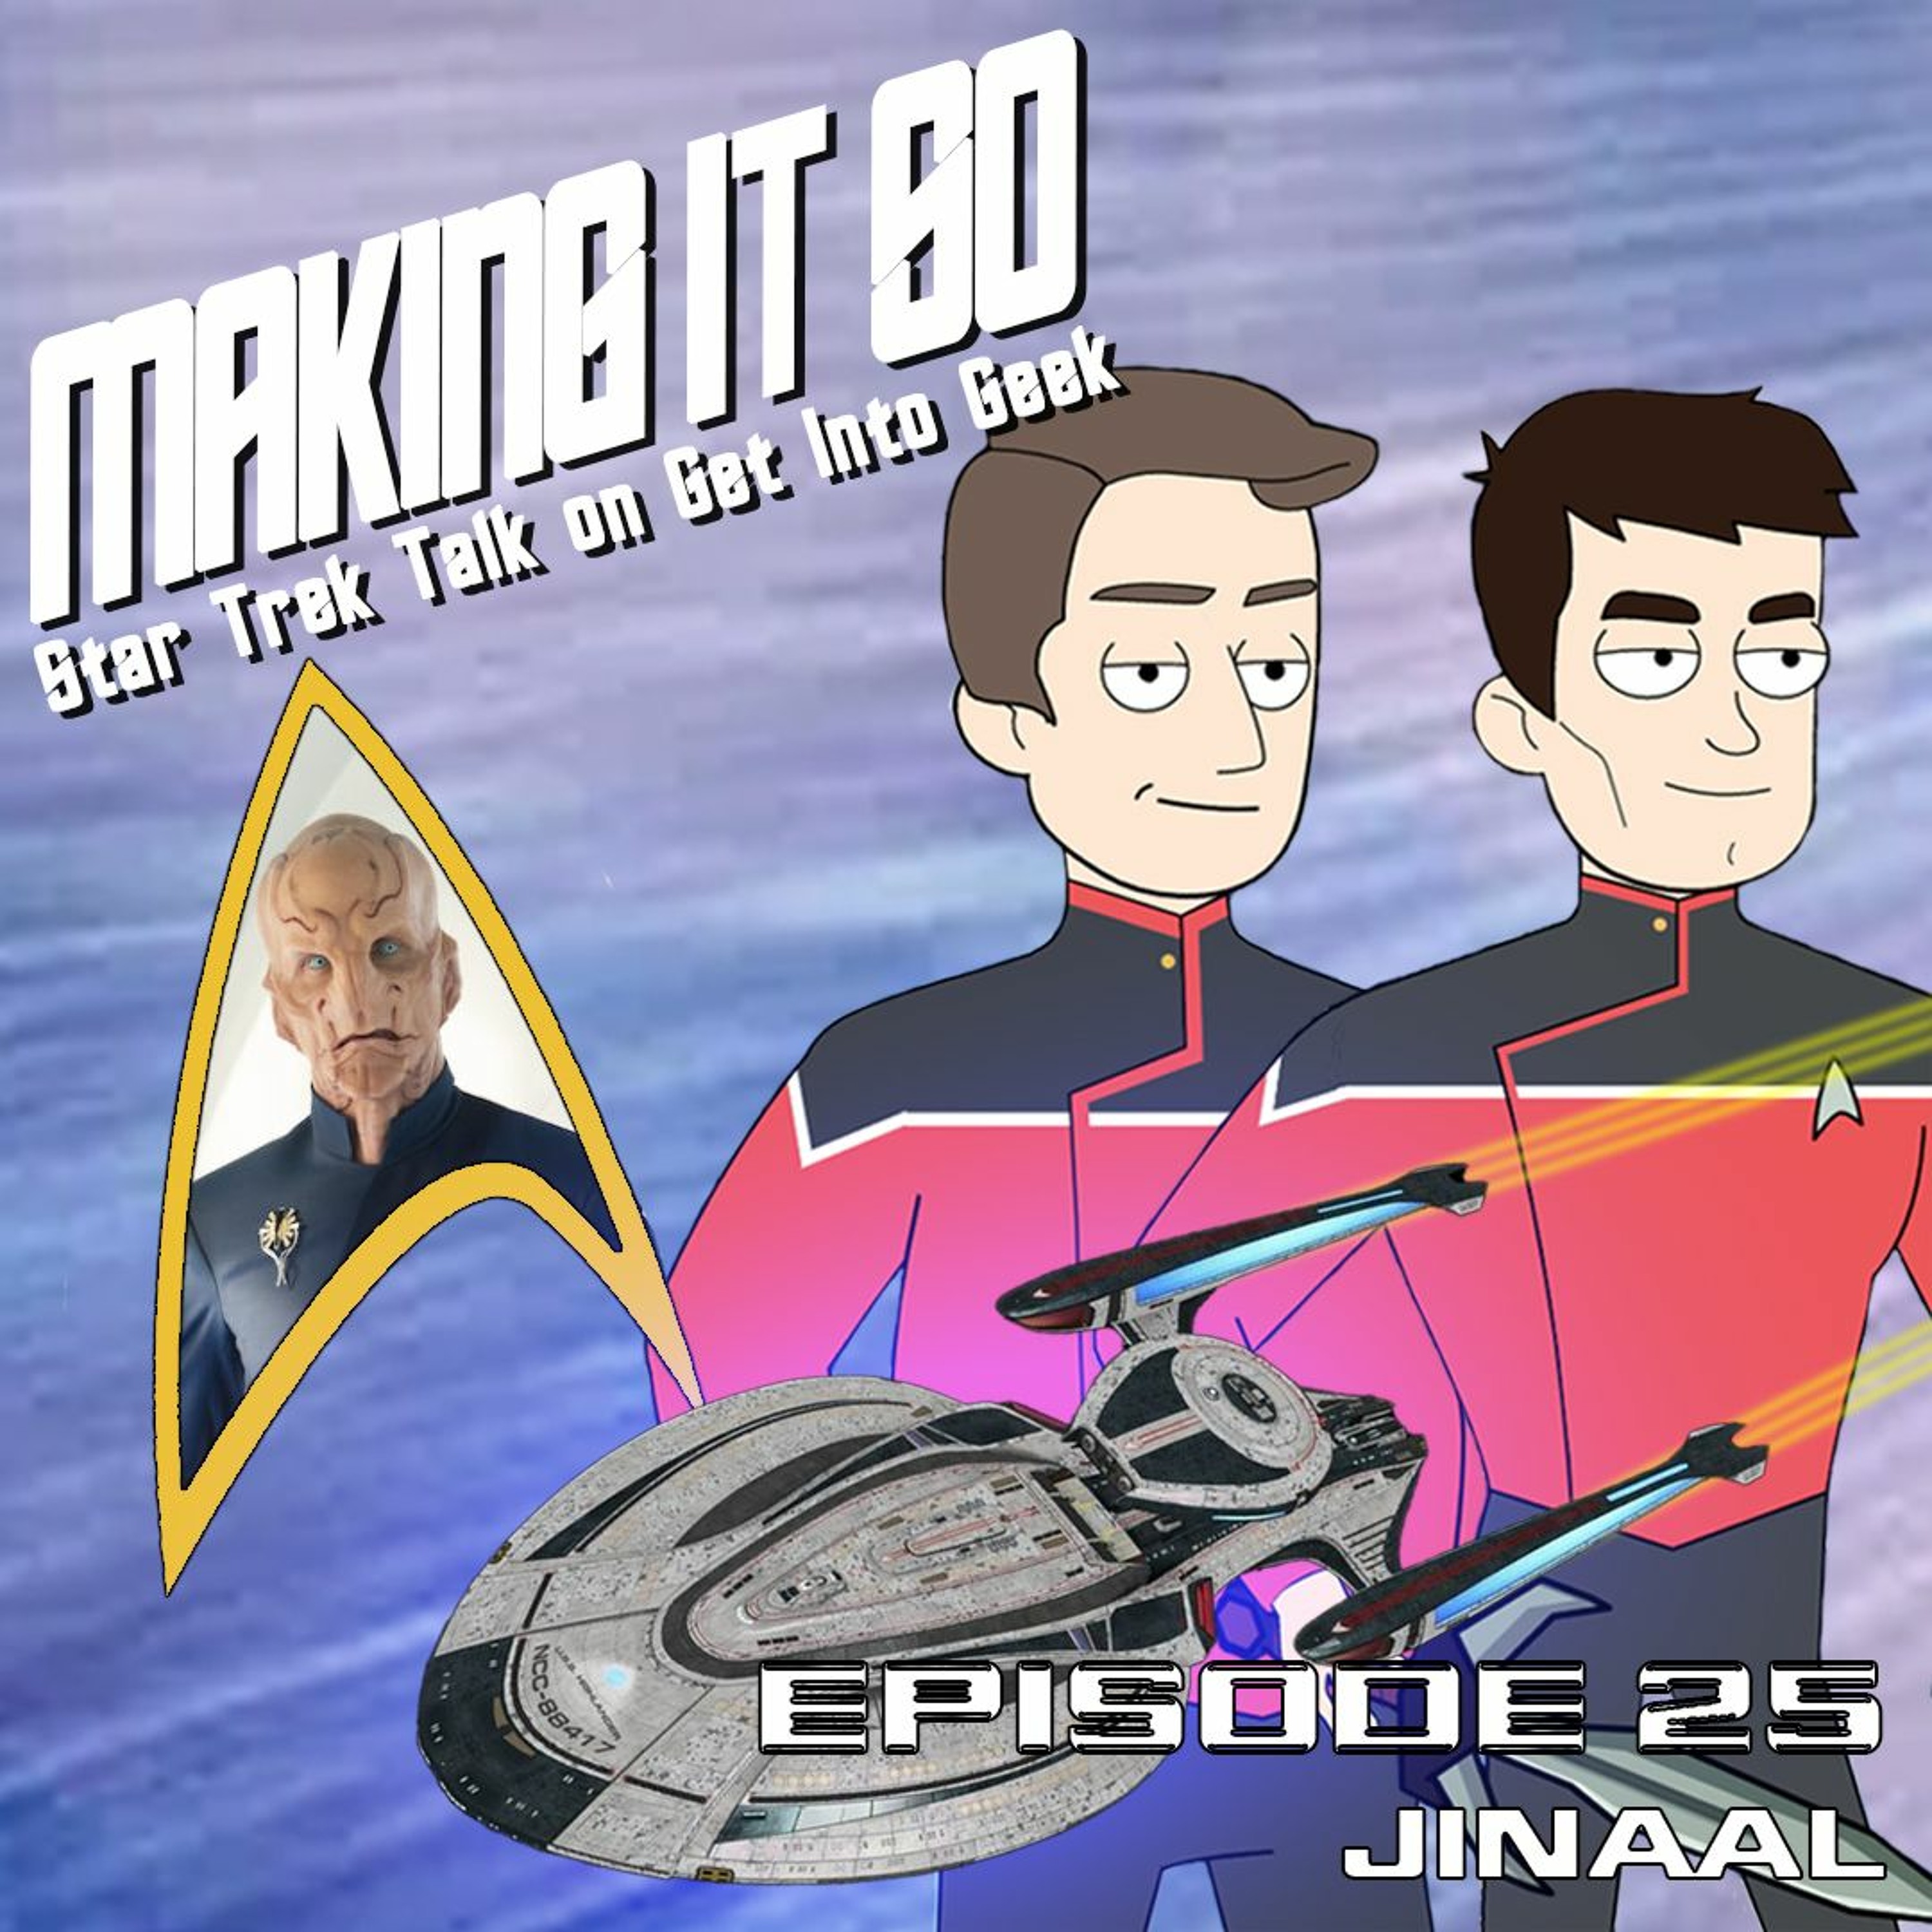 Jinaal (Making It So - Star Trek Talk Episode 25)